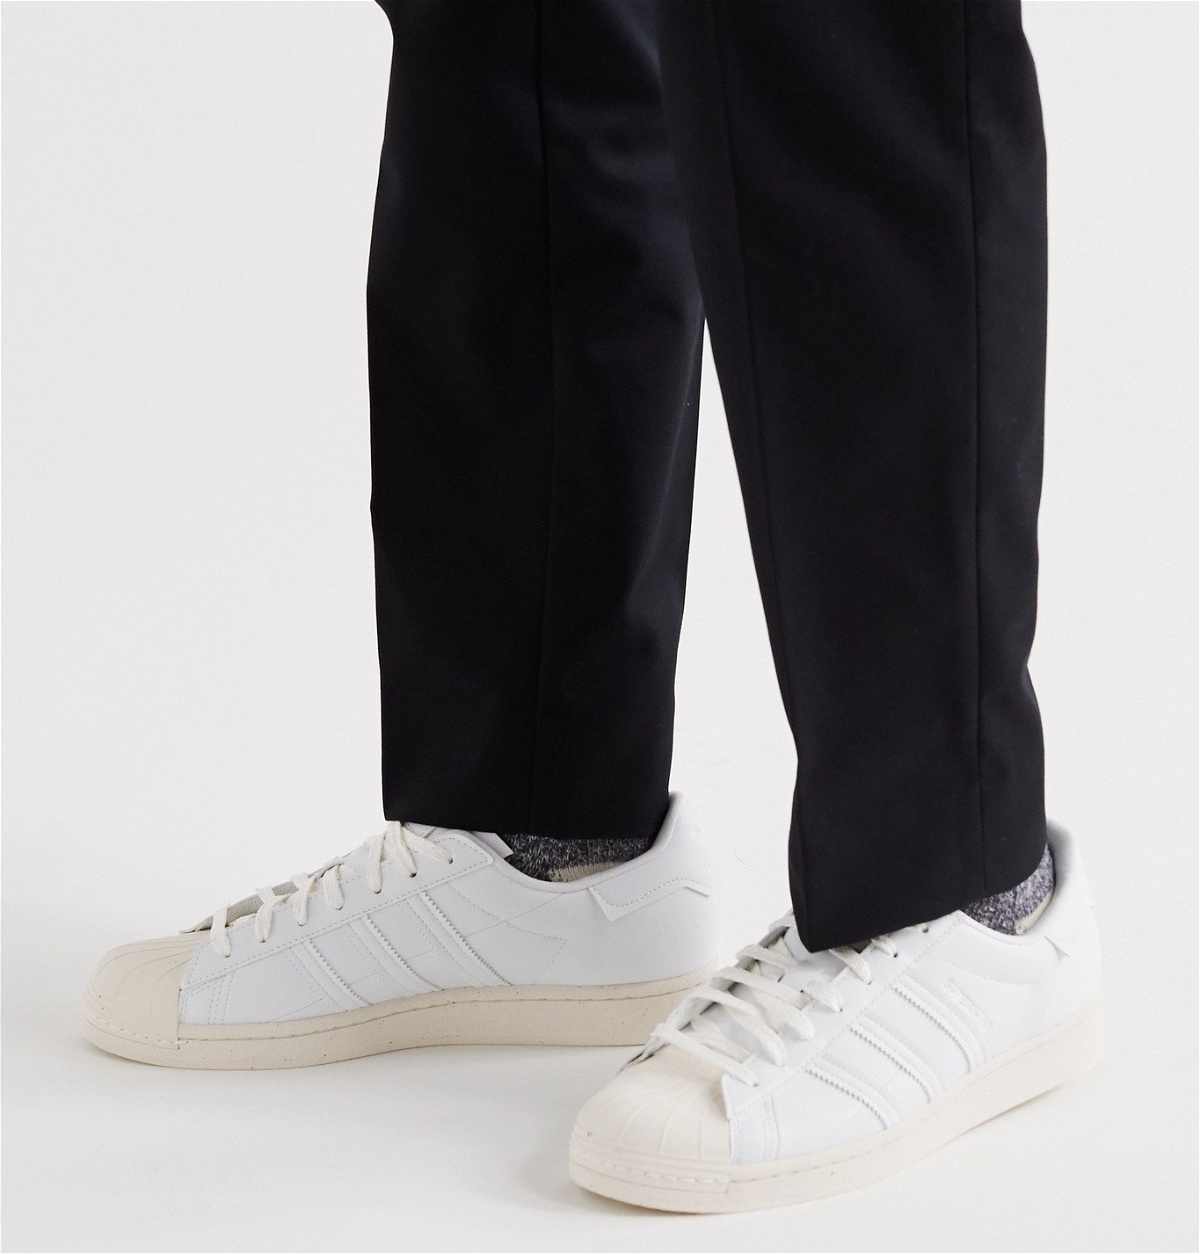 adidas Originals Superstar White - adidas Vegan - Leather Clean Alexander Wang Sneakers by Classics Originals